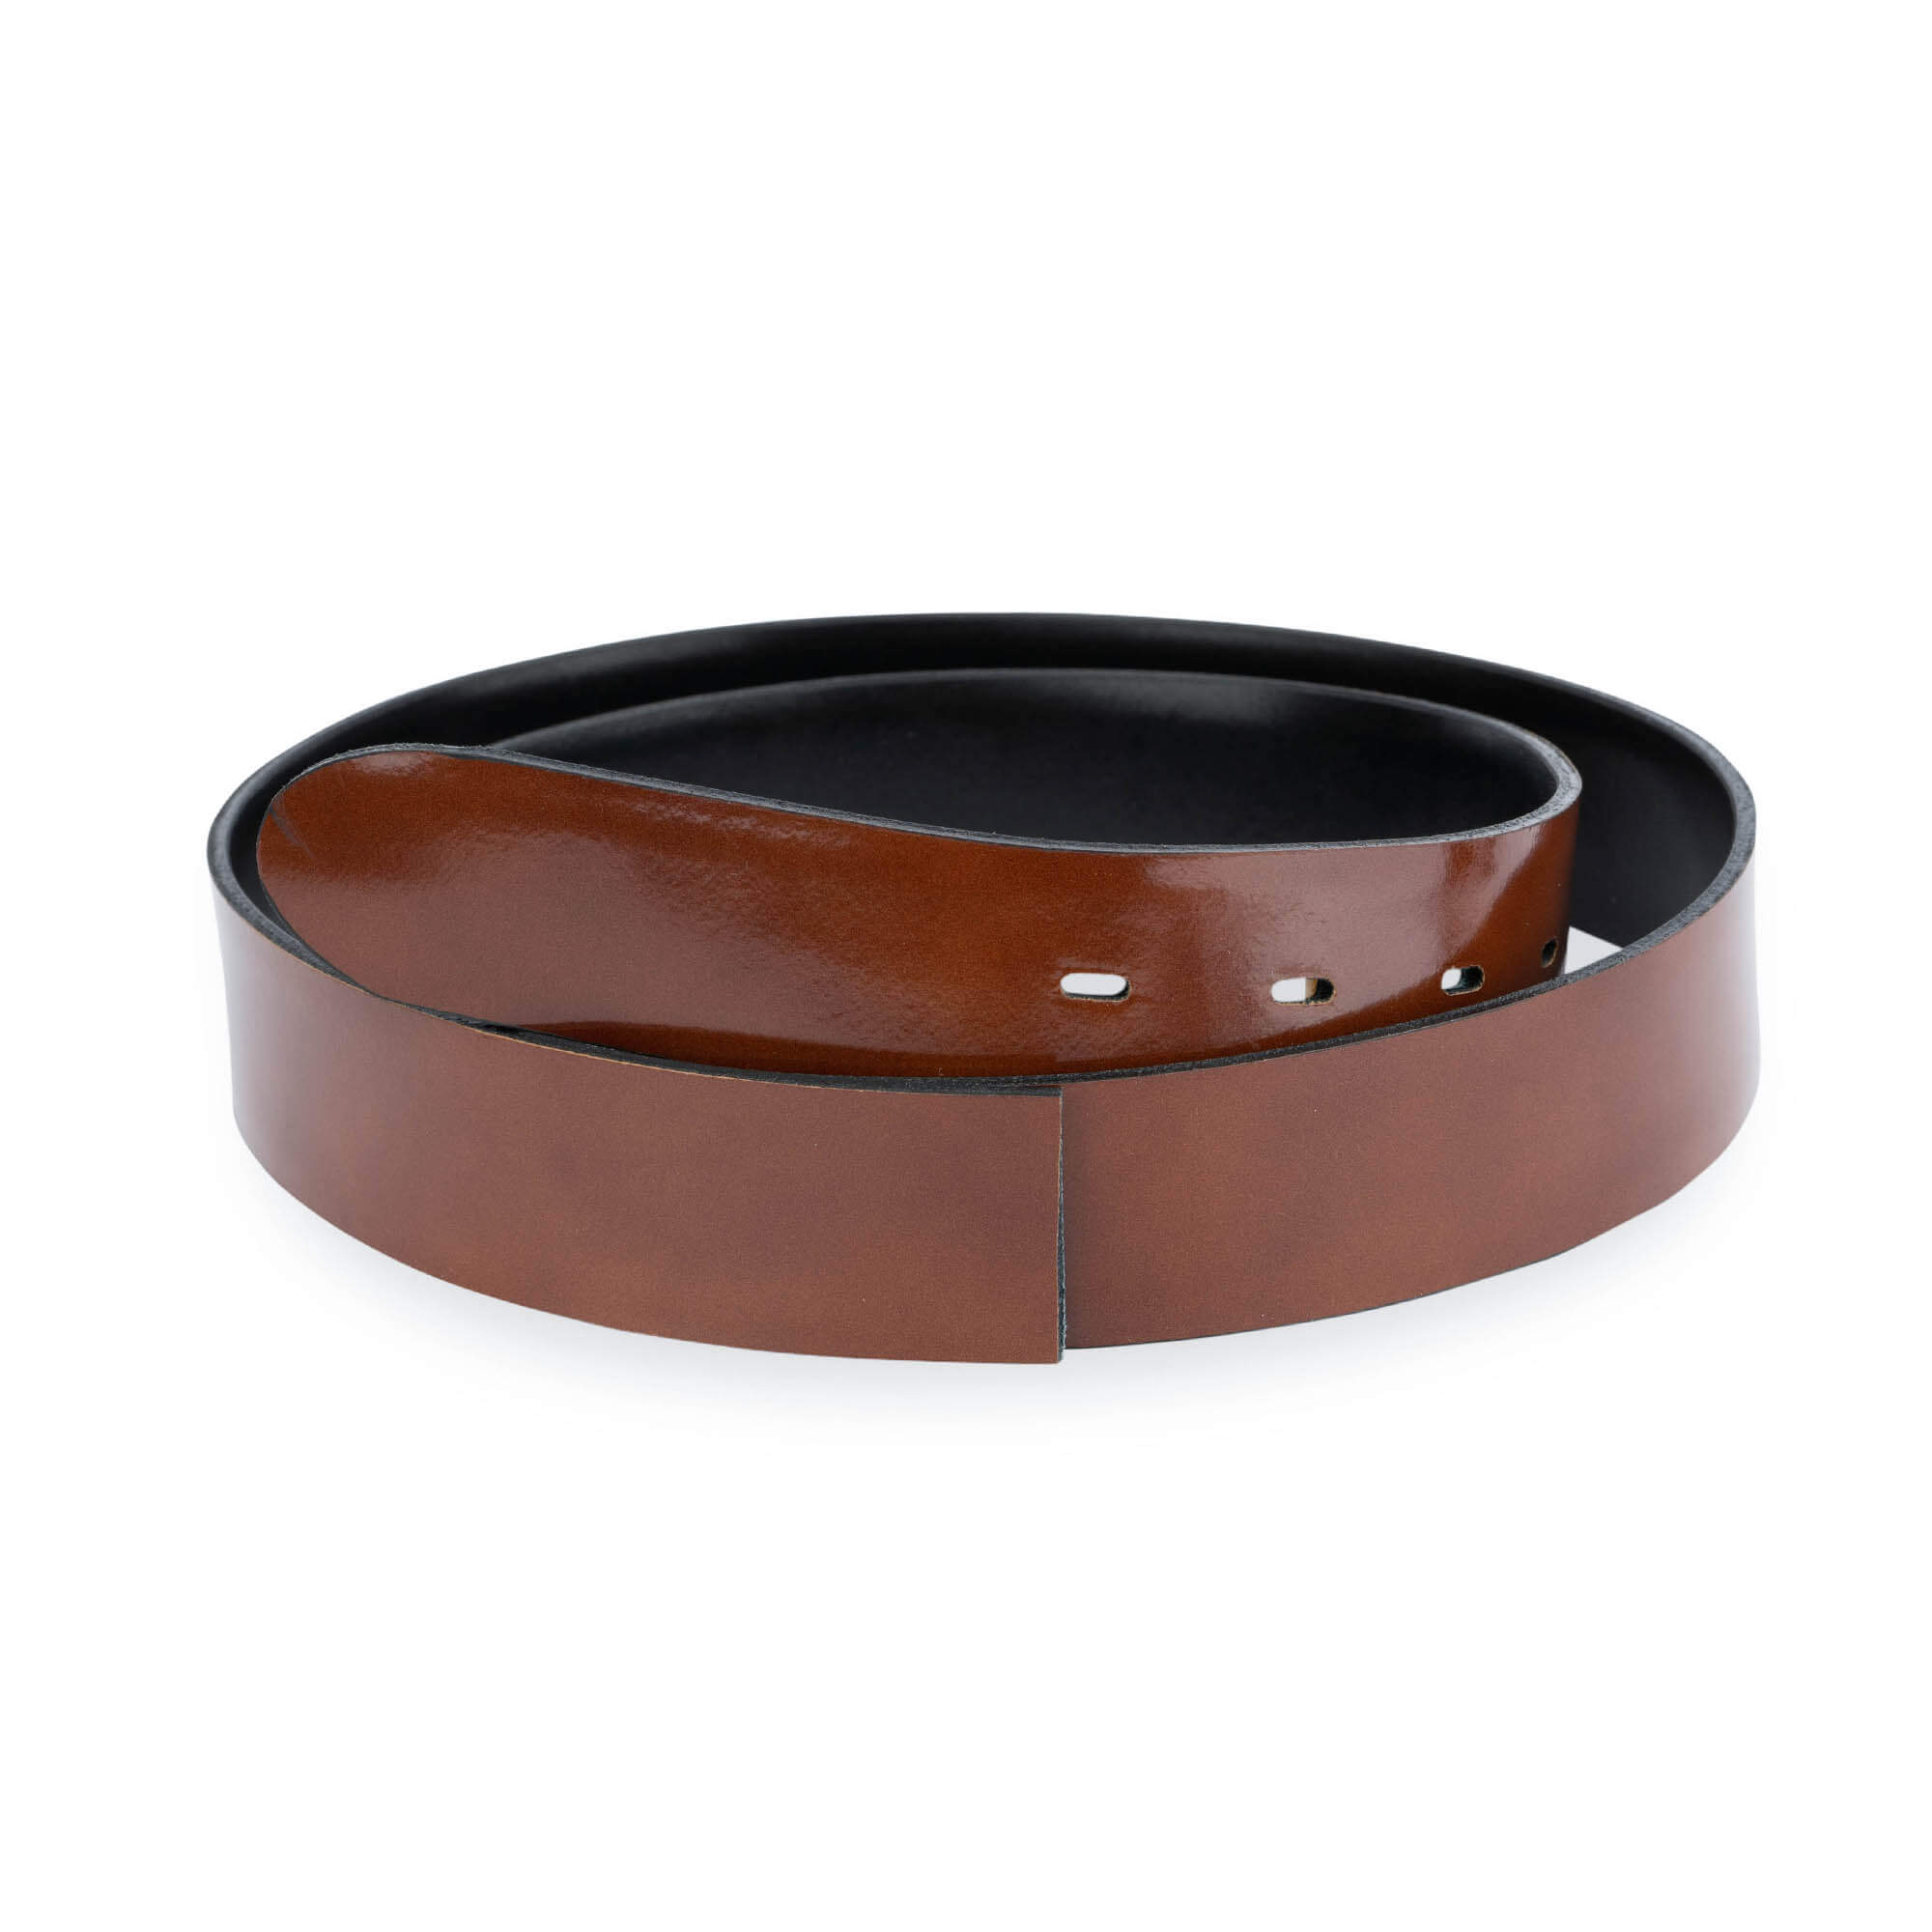 Reversible Leather Belt Strap Men's belts buckles Black Brown No buckle Size 38"